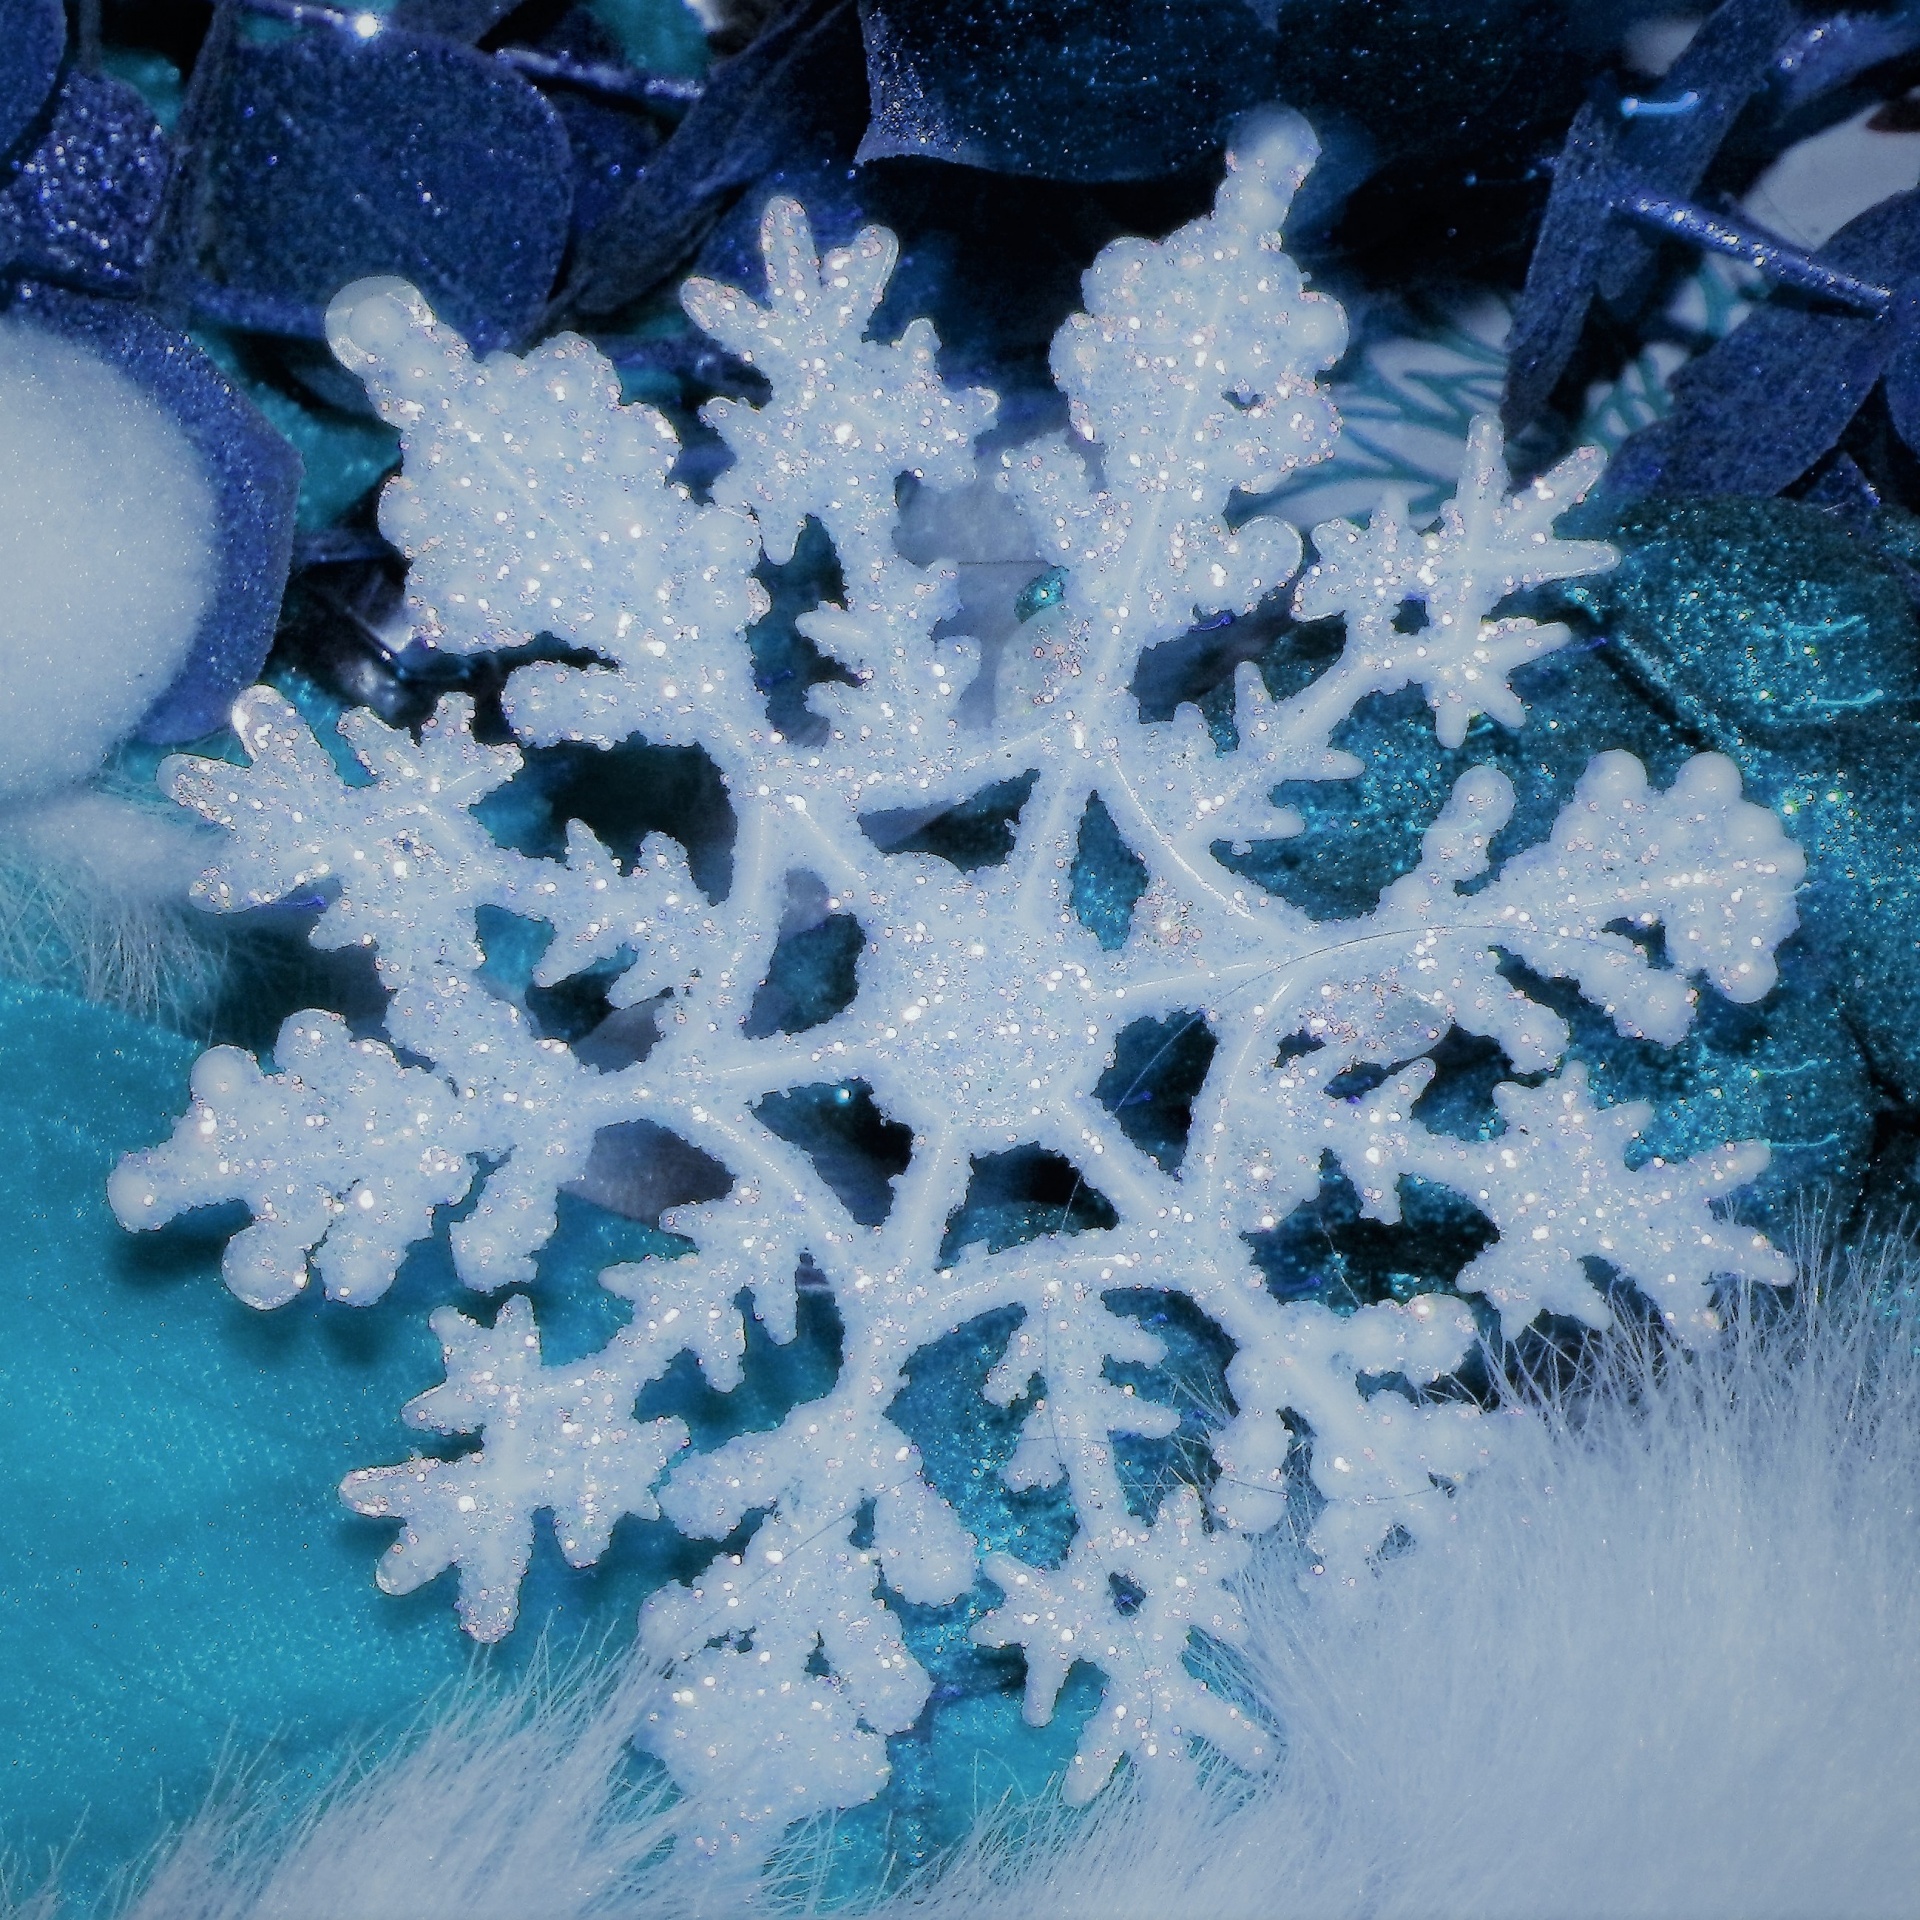 Snowflakes 2019 - 4 Free Stock Photo - Public Domain Pictures